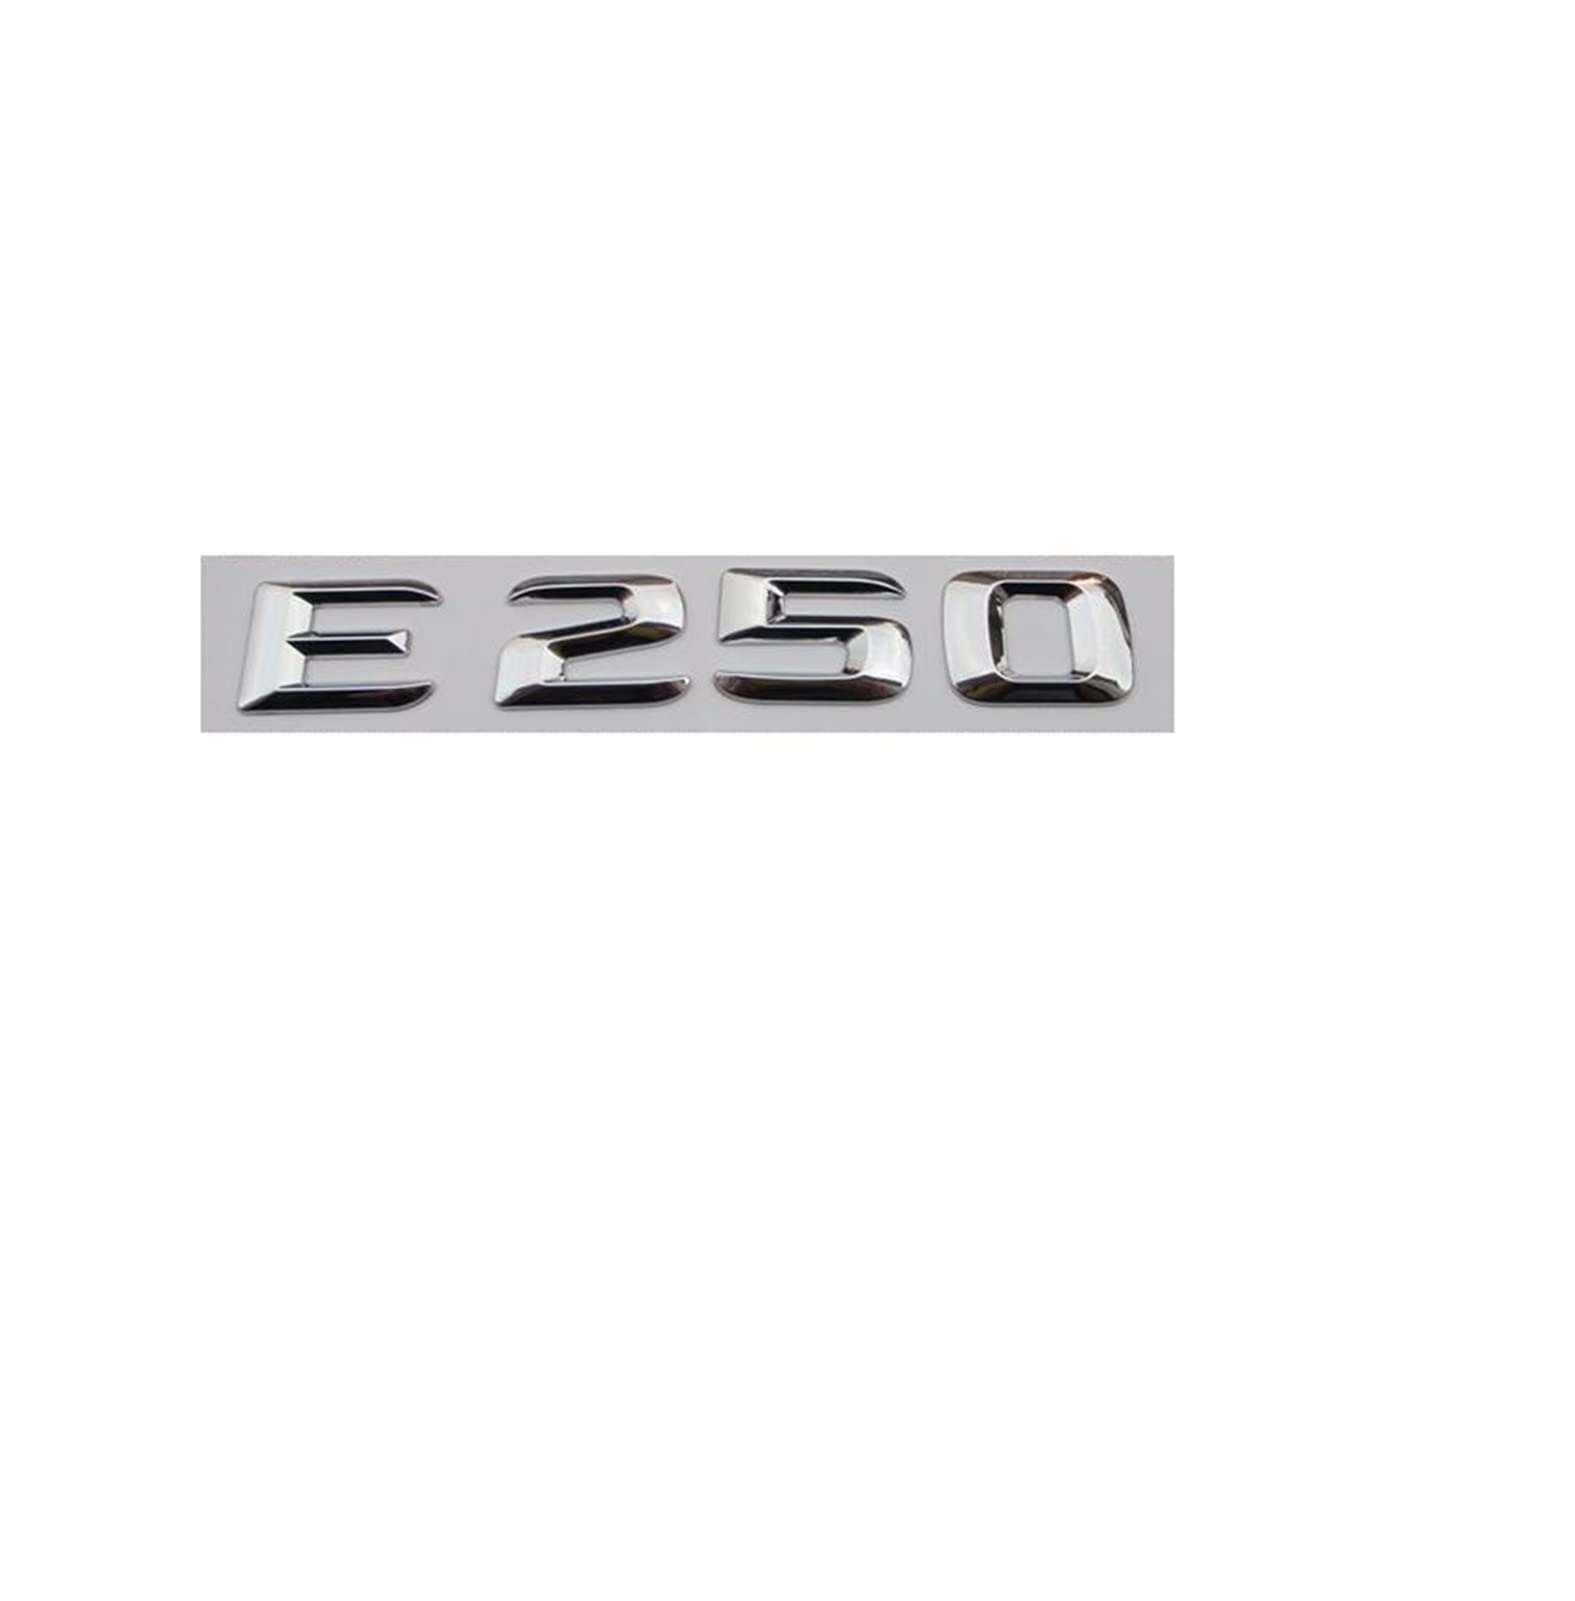 BMINO Chrom E 250" Cartrunk Heckbuchstaben Wörter Number Abzeichen Emblem Embleme Aufkleber Aufkleber Kompatibel for Mercedes Benz E Klasse E250 Logo-Aufkleber von BMINO